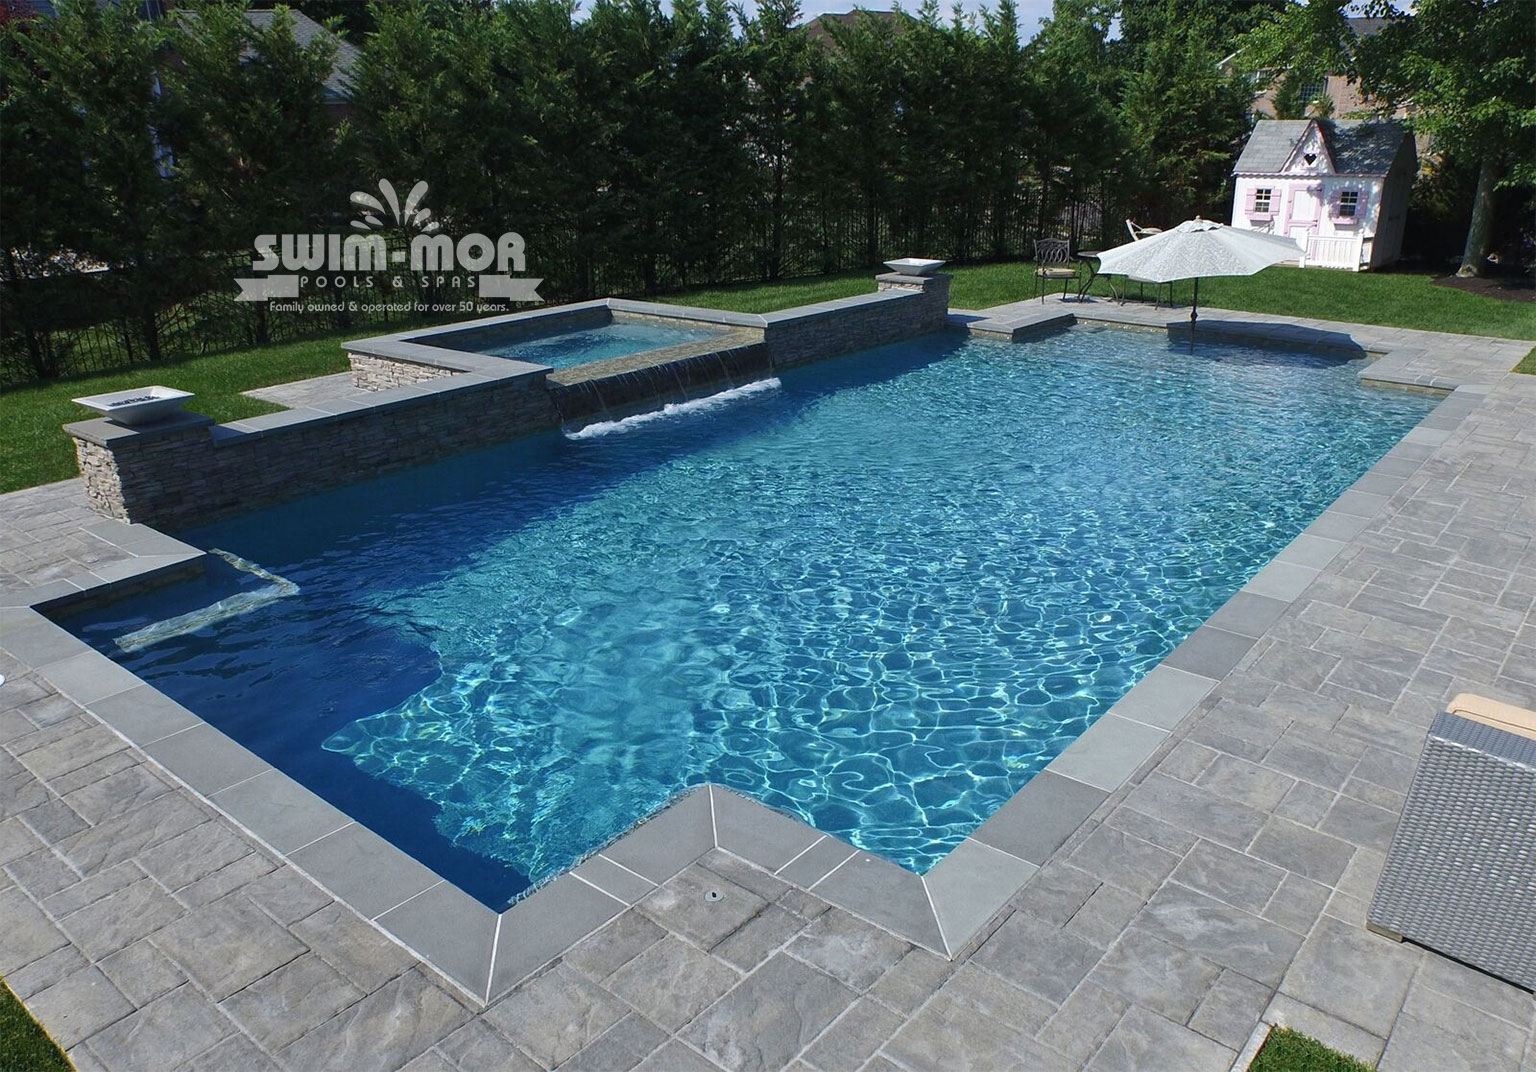 Classic Pool Designs – Swim-Mor Pools and Spas